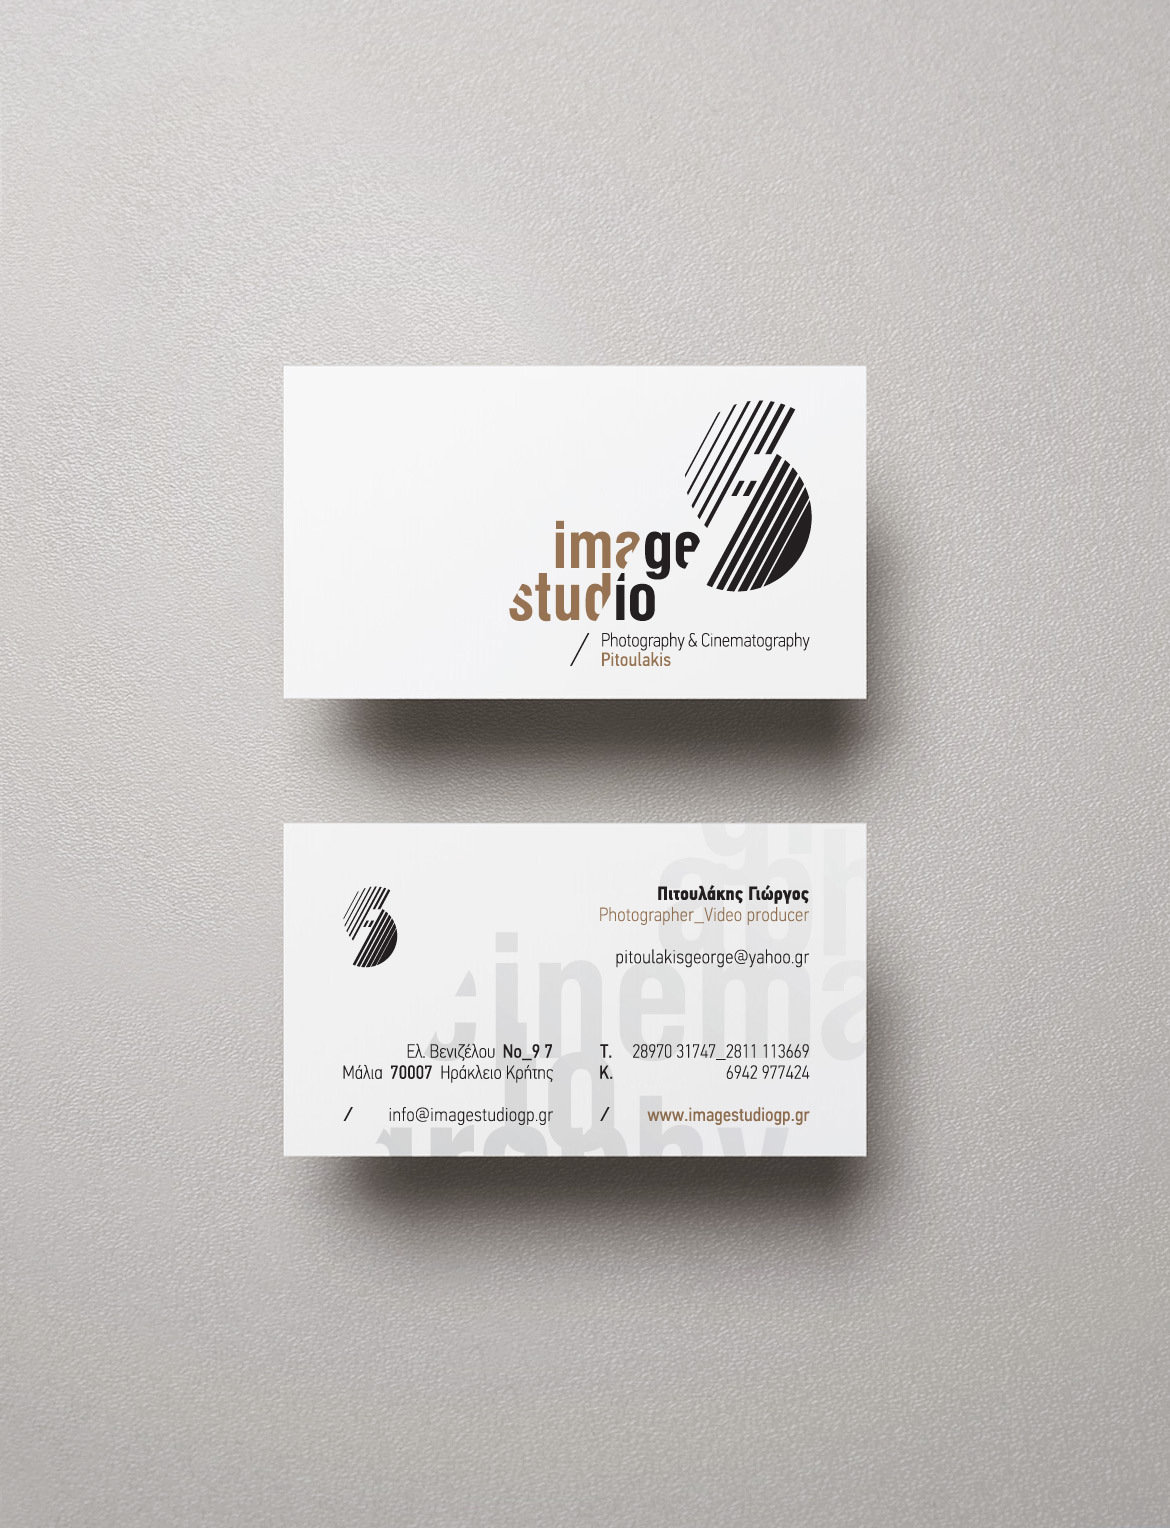 Image studio business cards